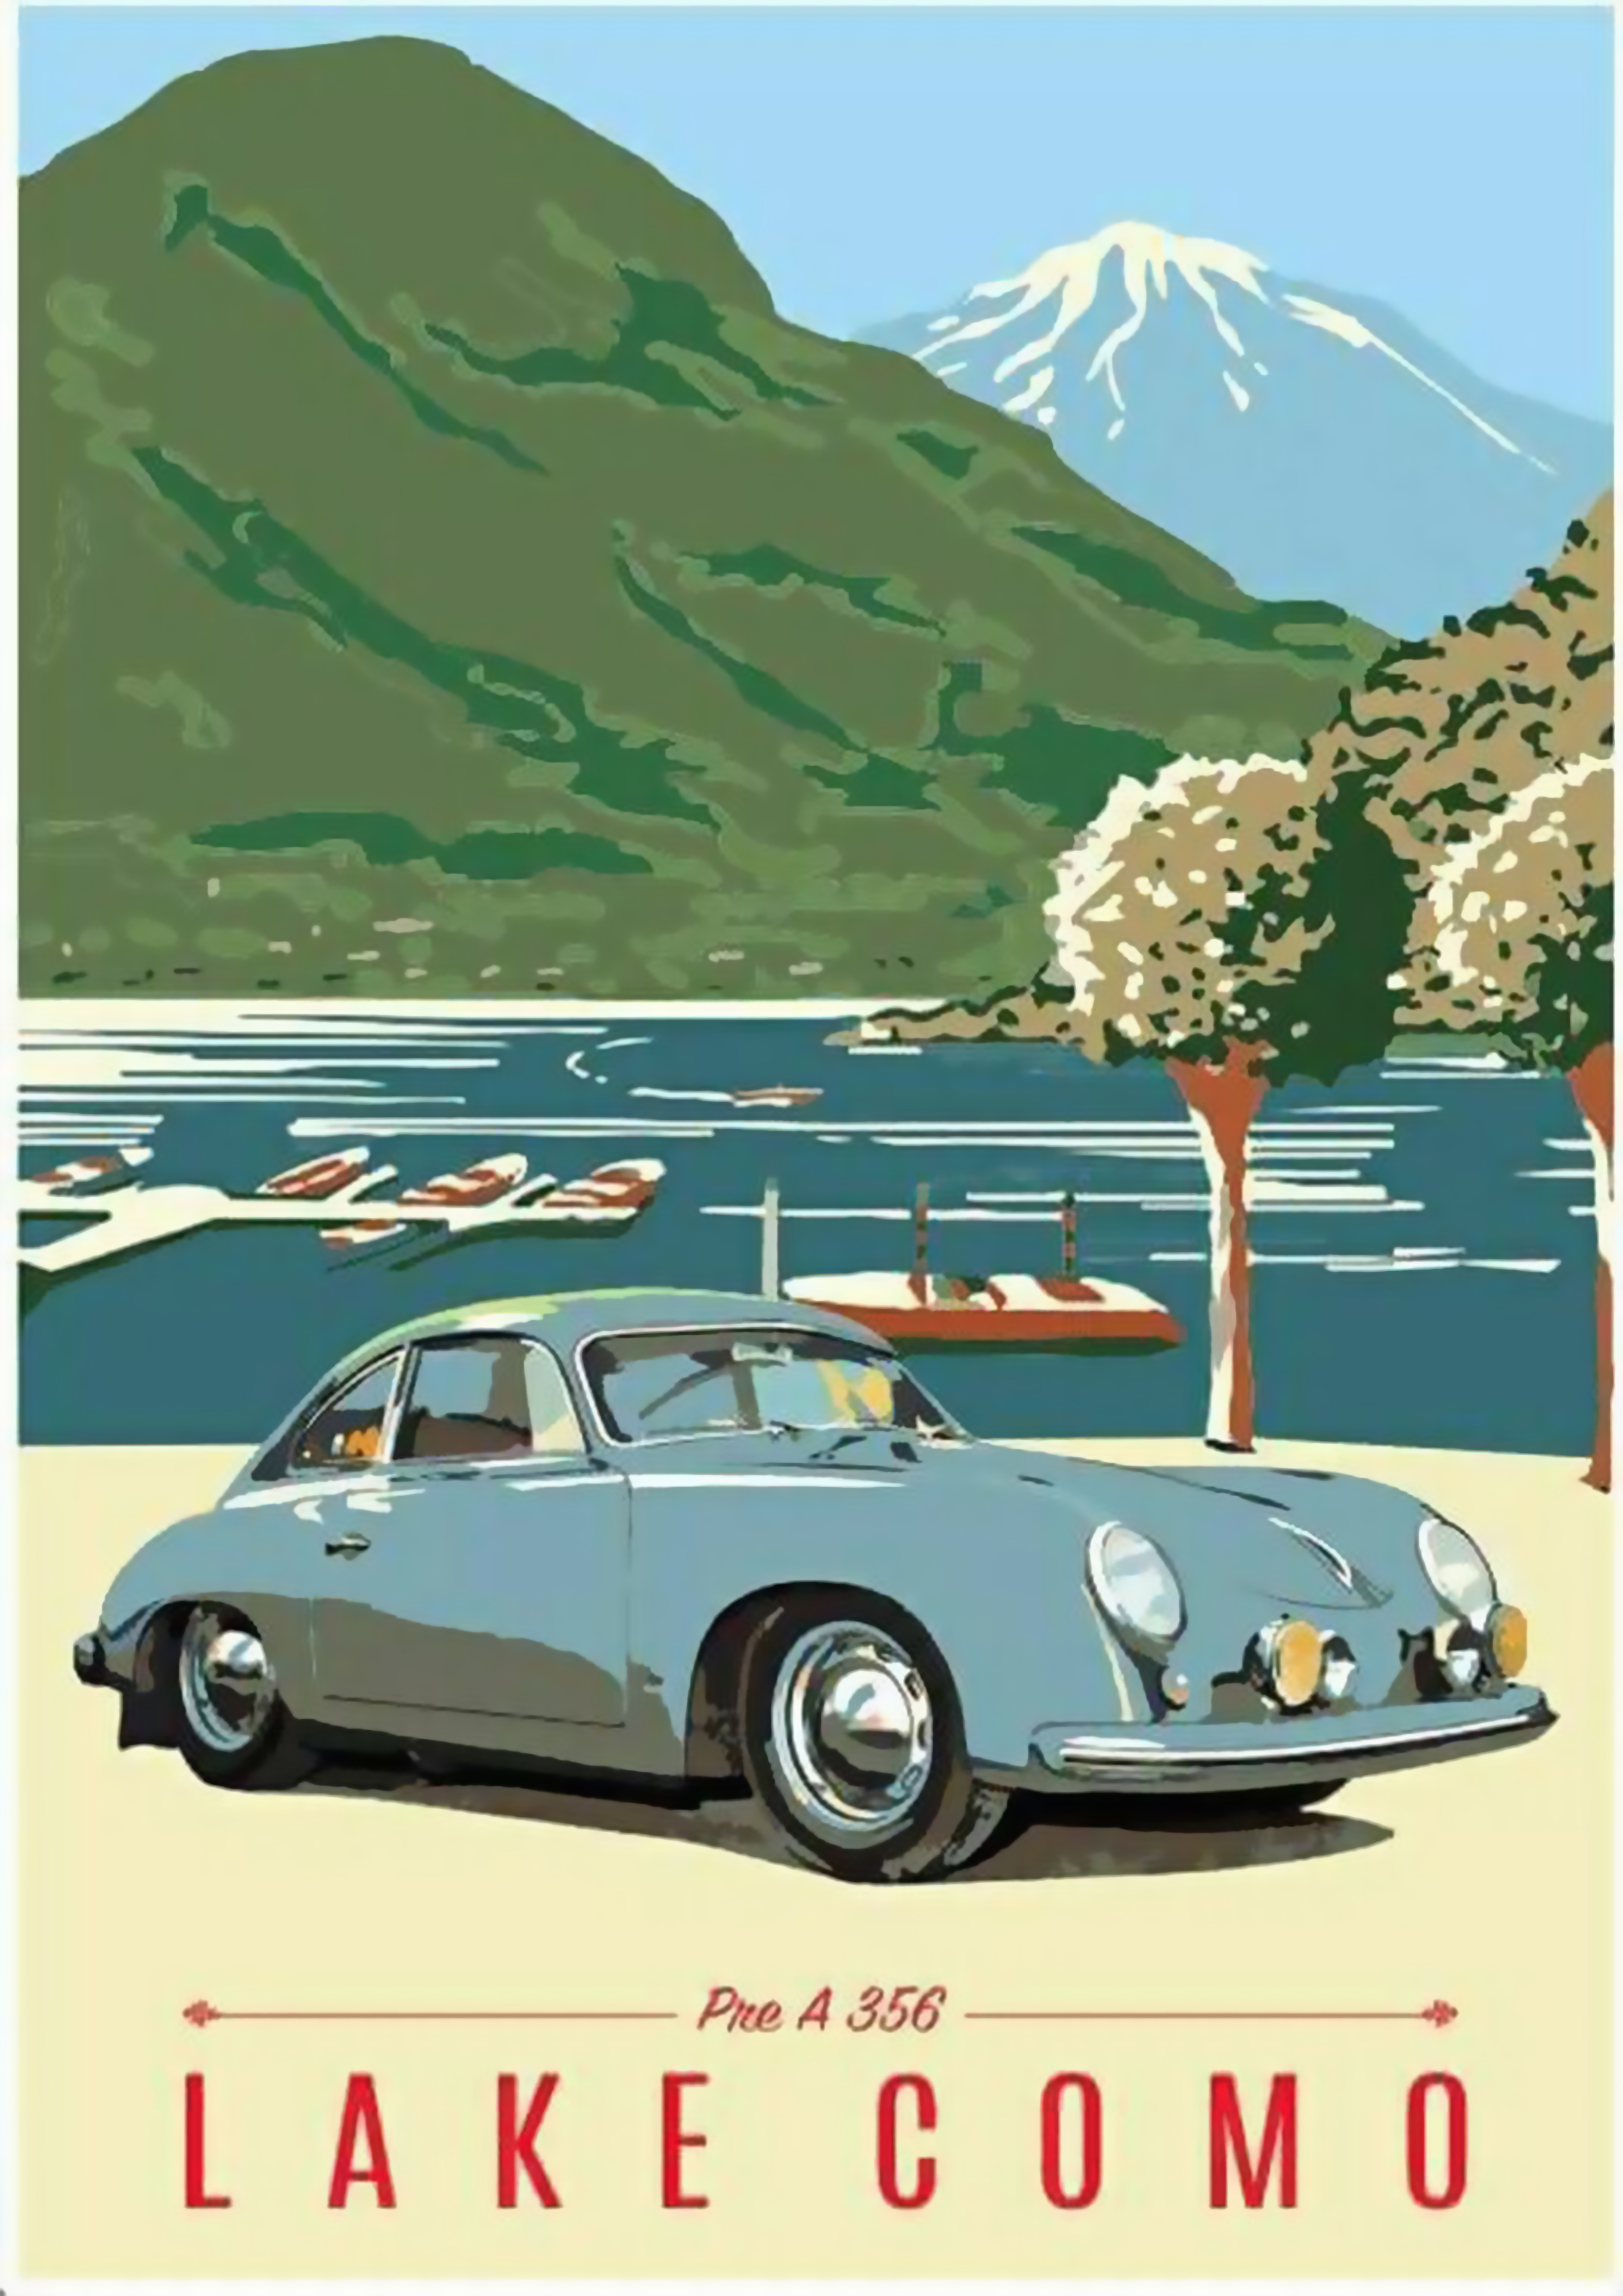 Lake Como, Italy Travel Poster